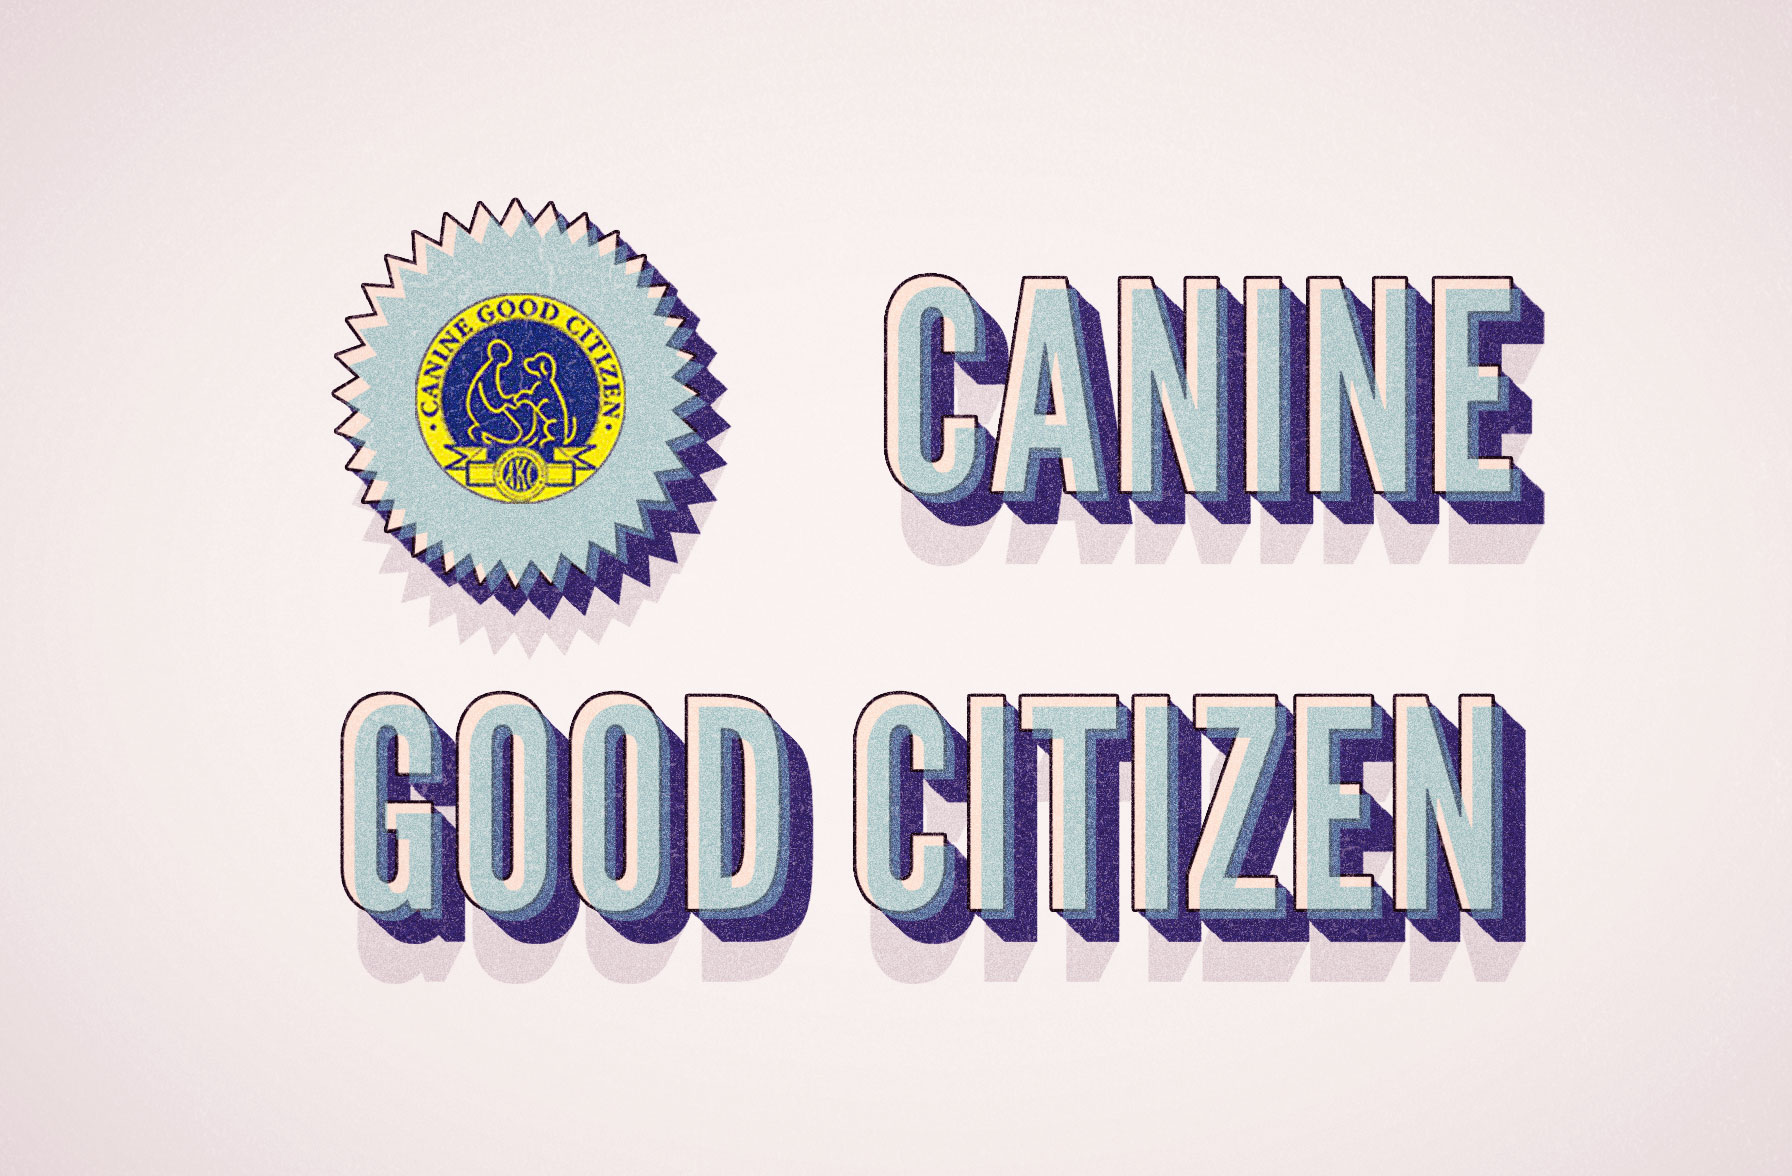 akc canine good citizen advanced